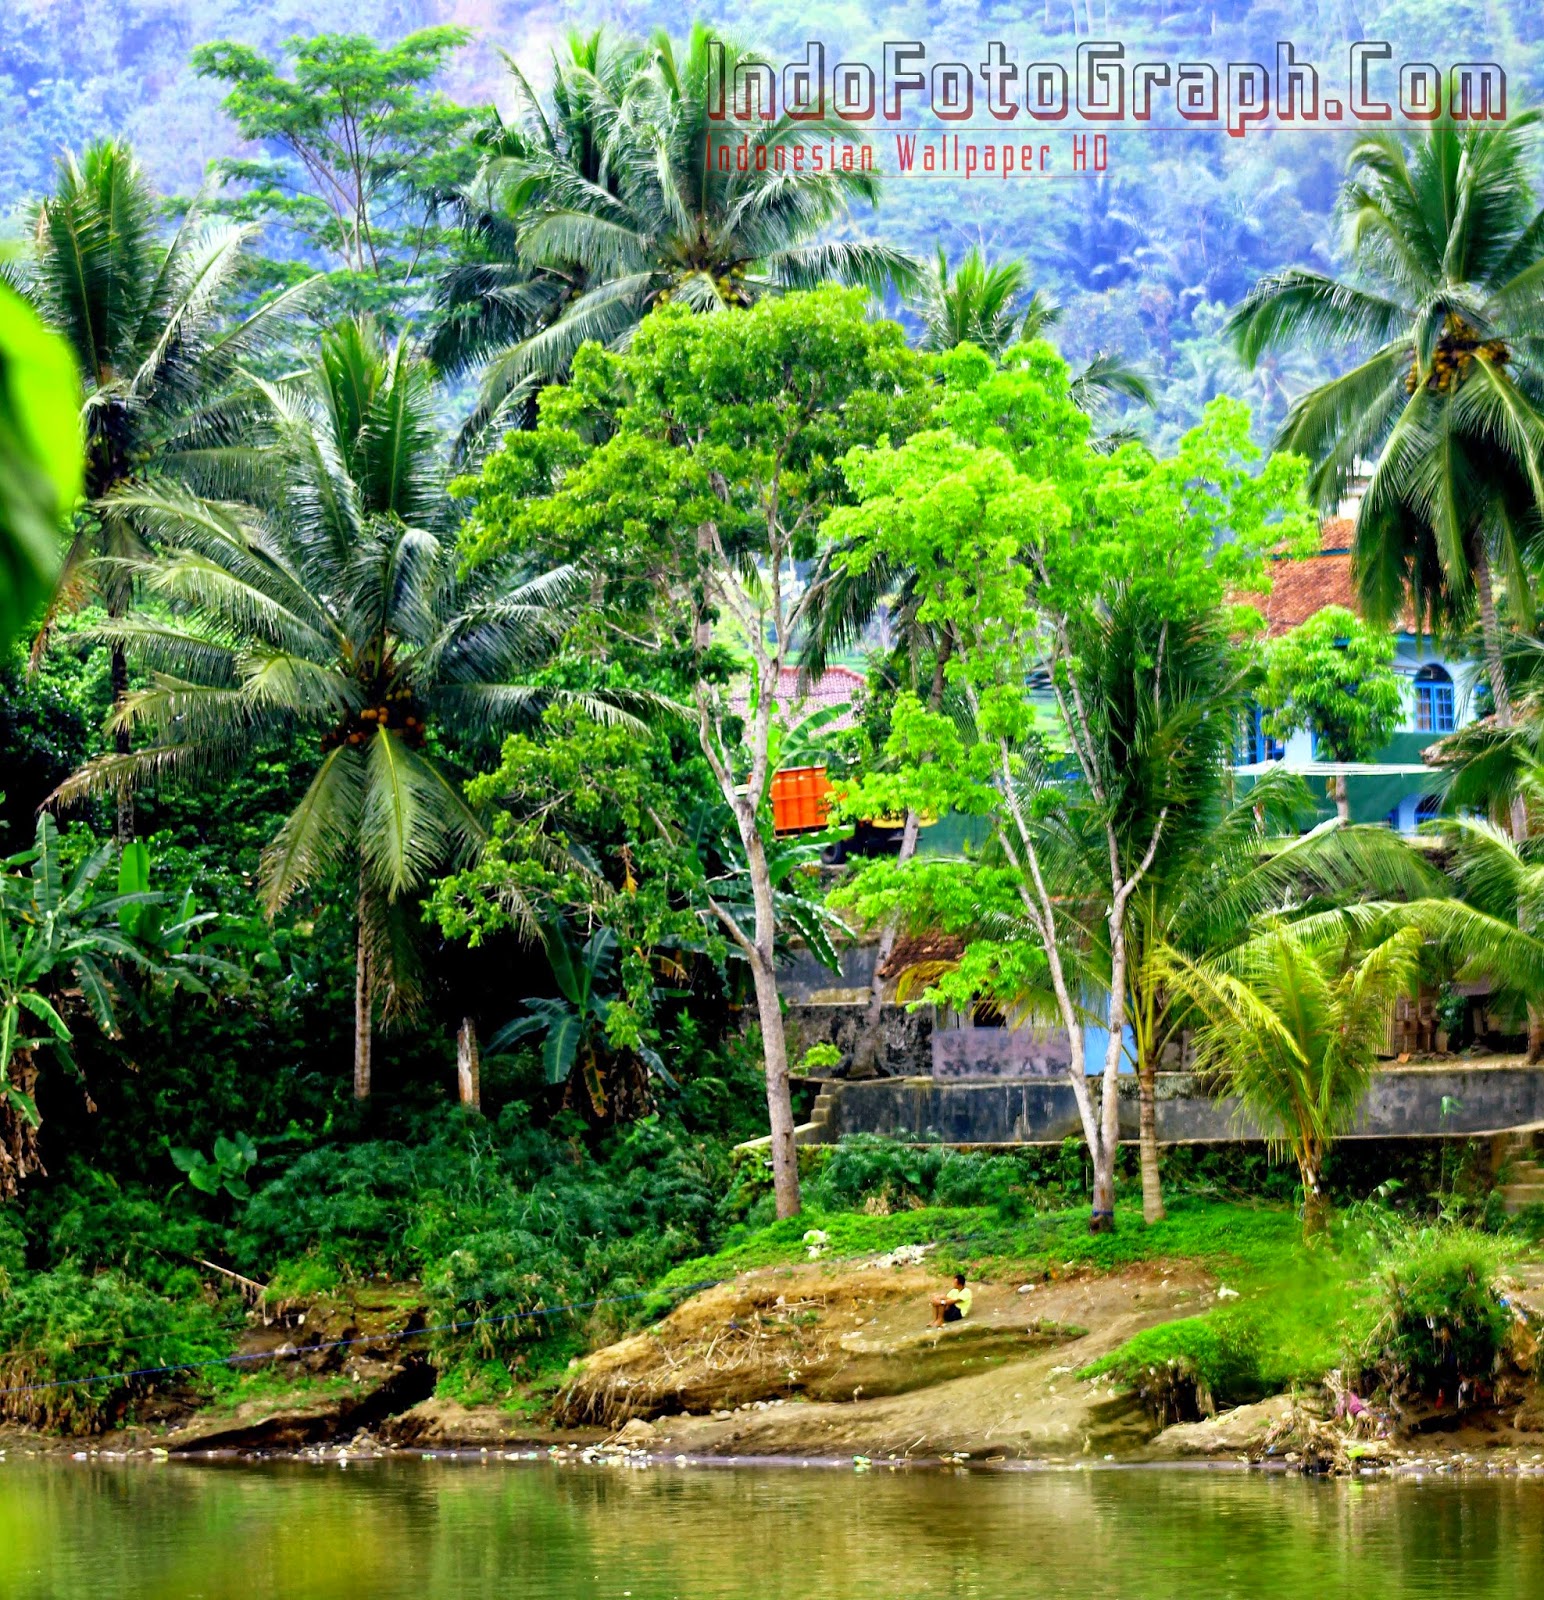 fondos de pantalla pemandangan indah,paisaje natural,naturaleza,árbol,selva,palmera